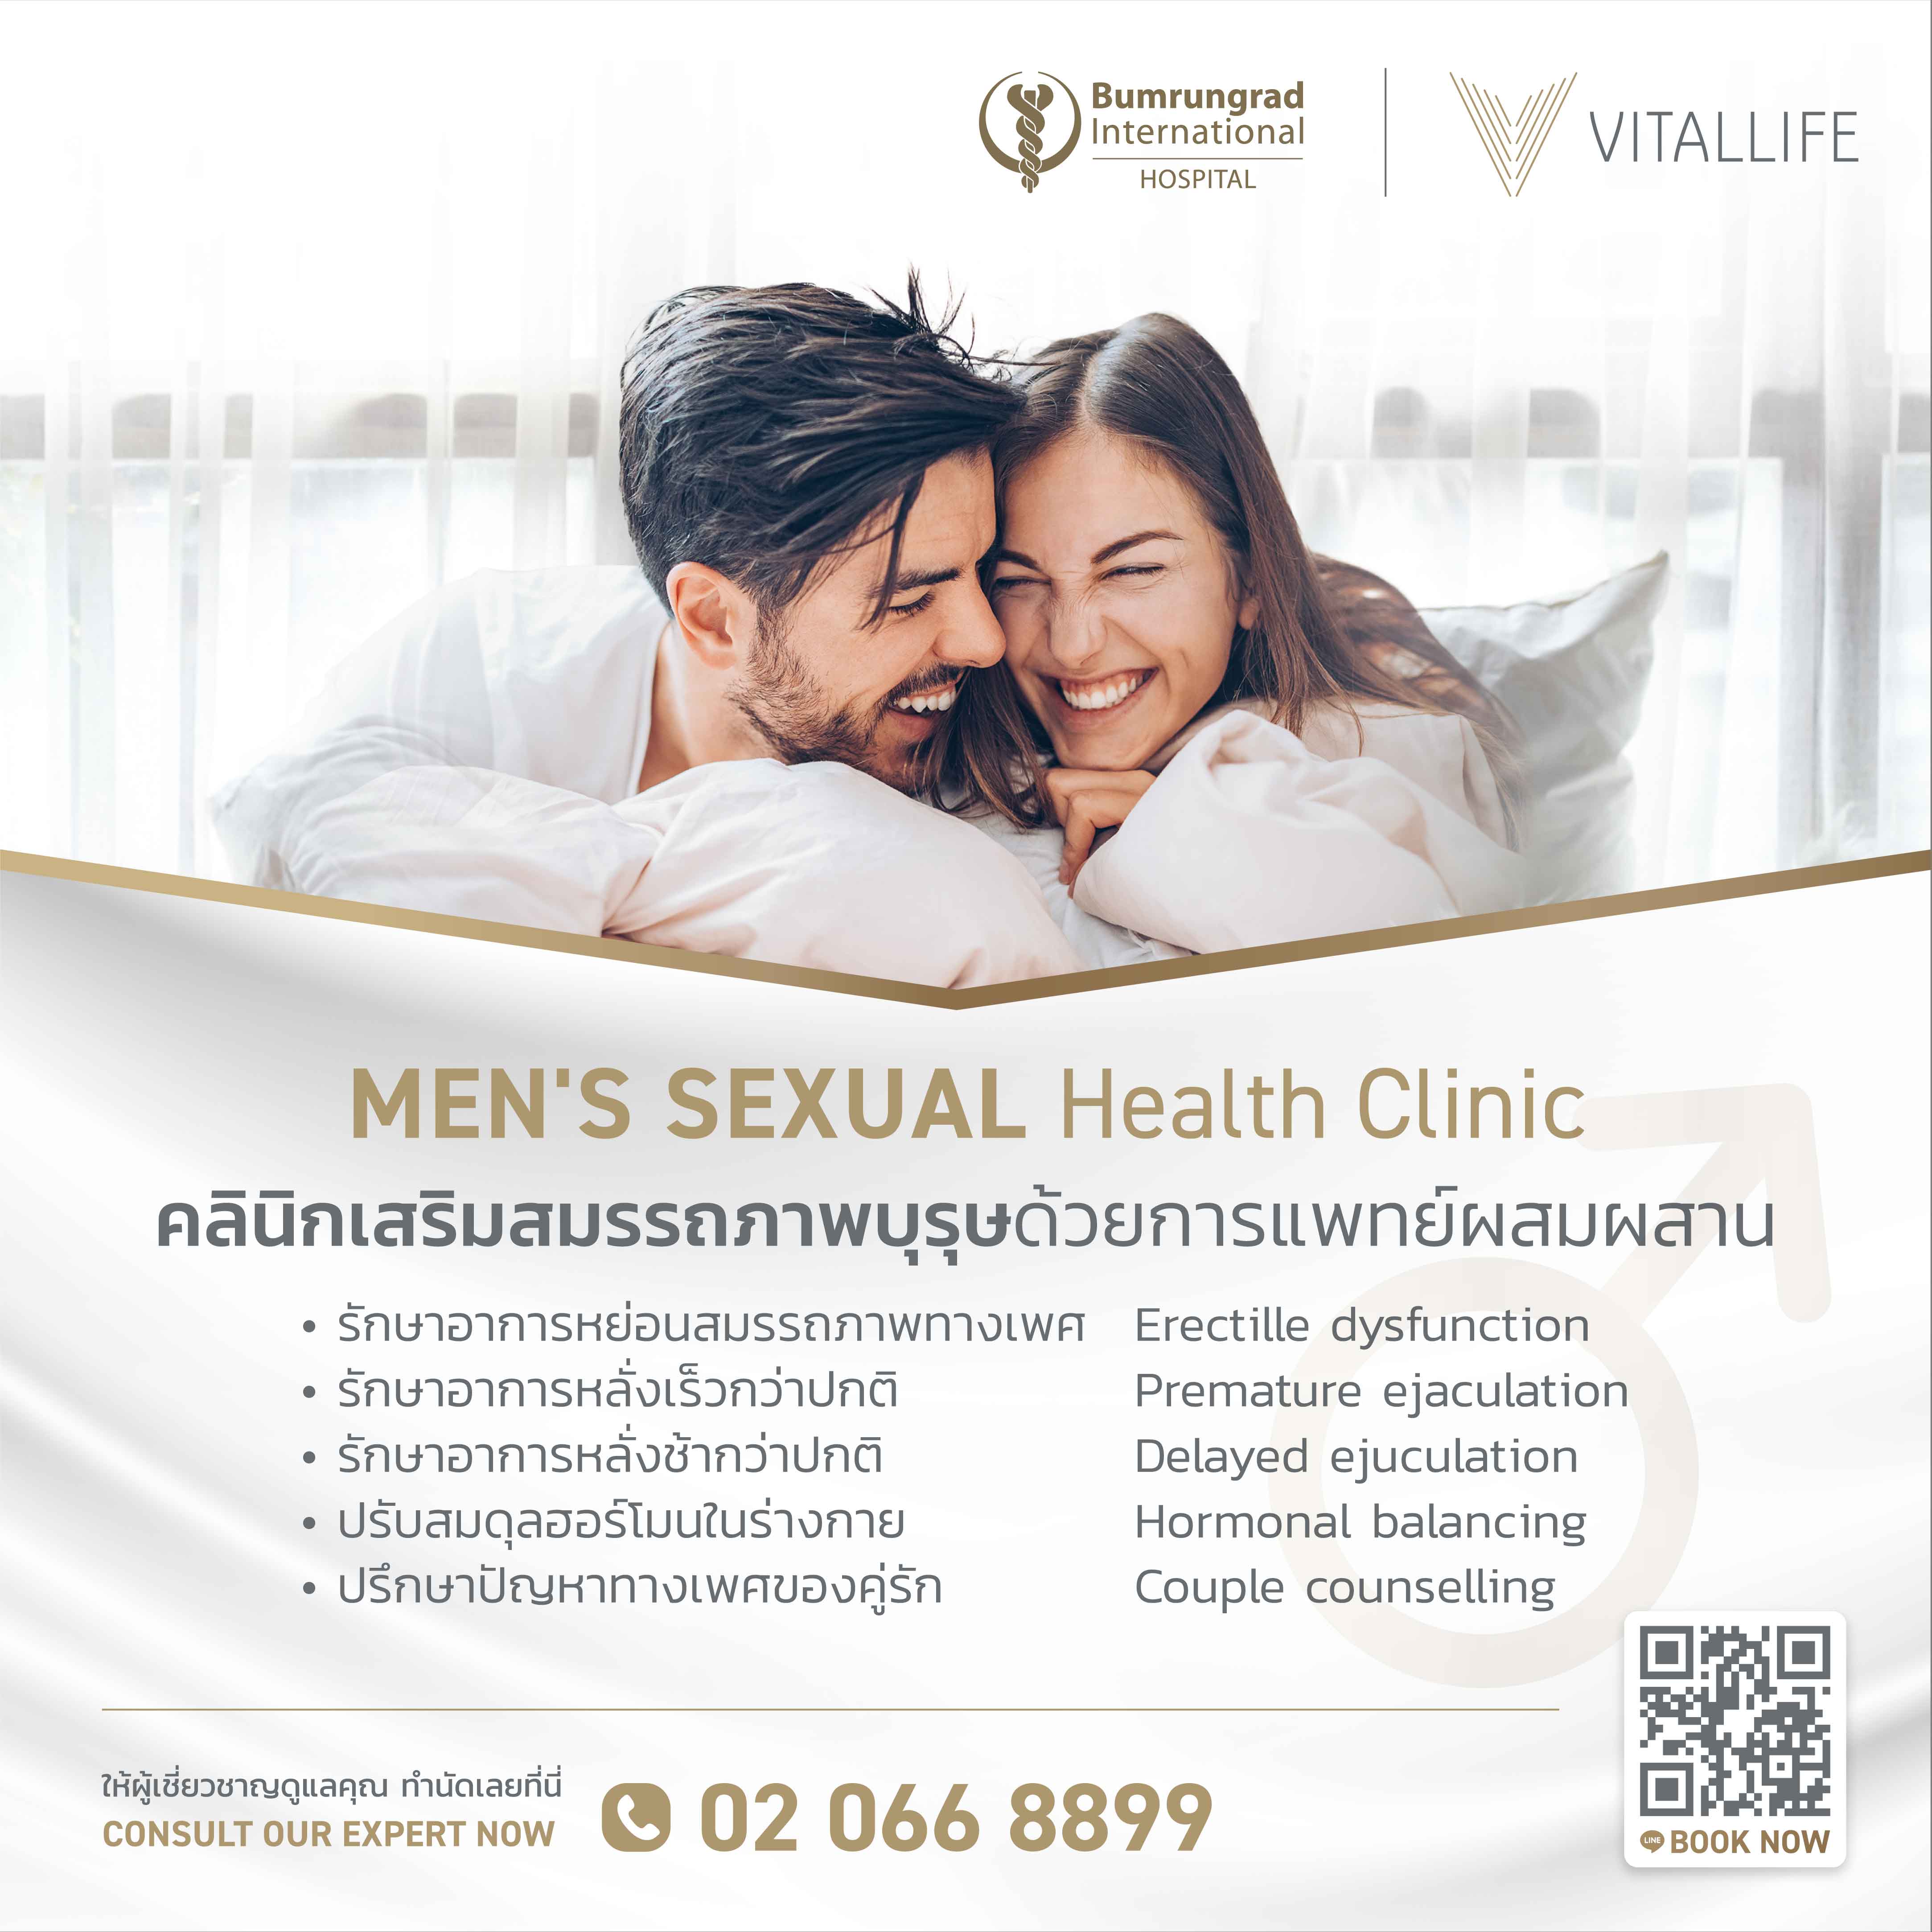 220805_VitalLife_Sexual-Health-Clinic_Social-Post_1040x1040px_Final_CO_CS6_AW-01.jpg